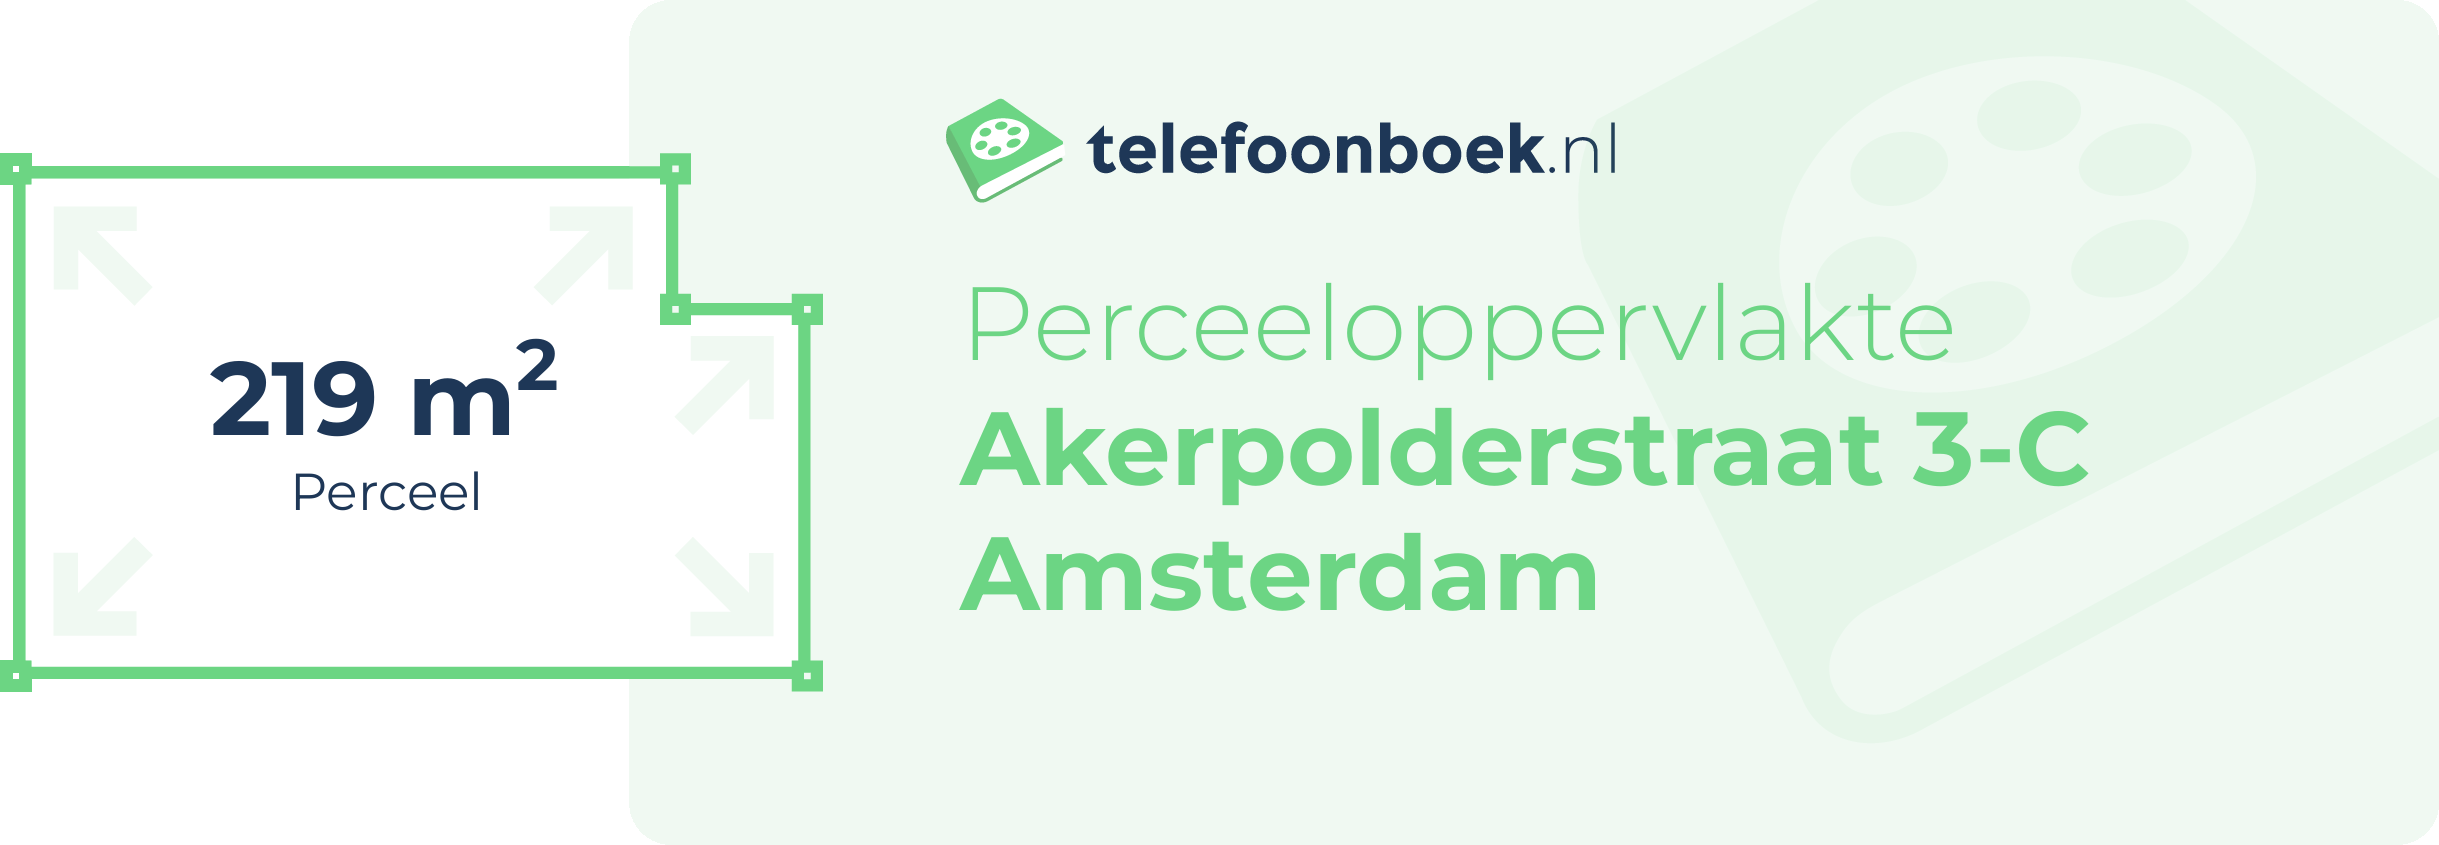 Perceeloppervlakte Akerpolderstraat 3-C Amsterdam